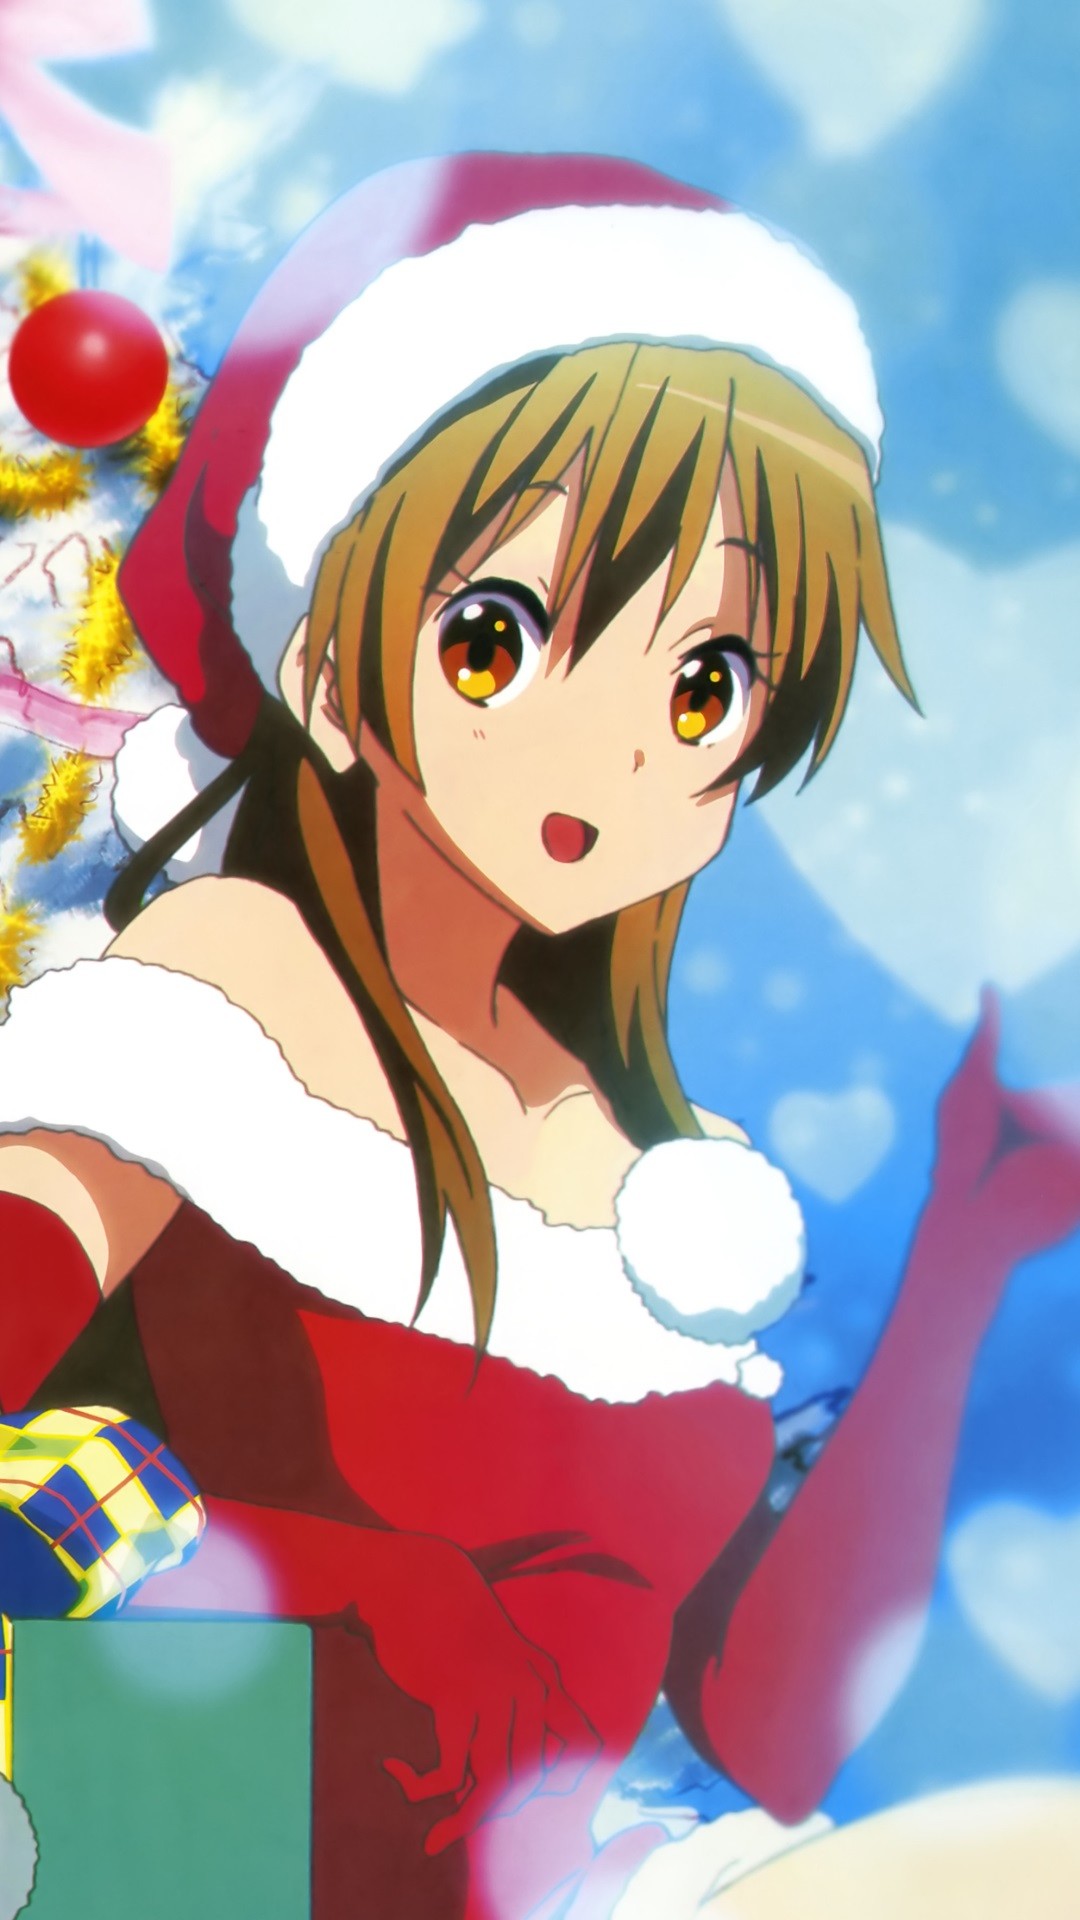 1080x1920 Christmas anime.Samsung Galaxy Note 3 wallpaper.